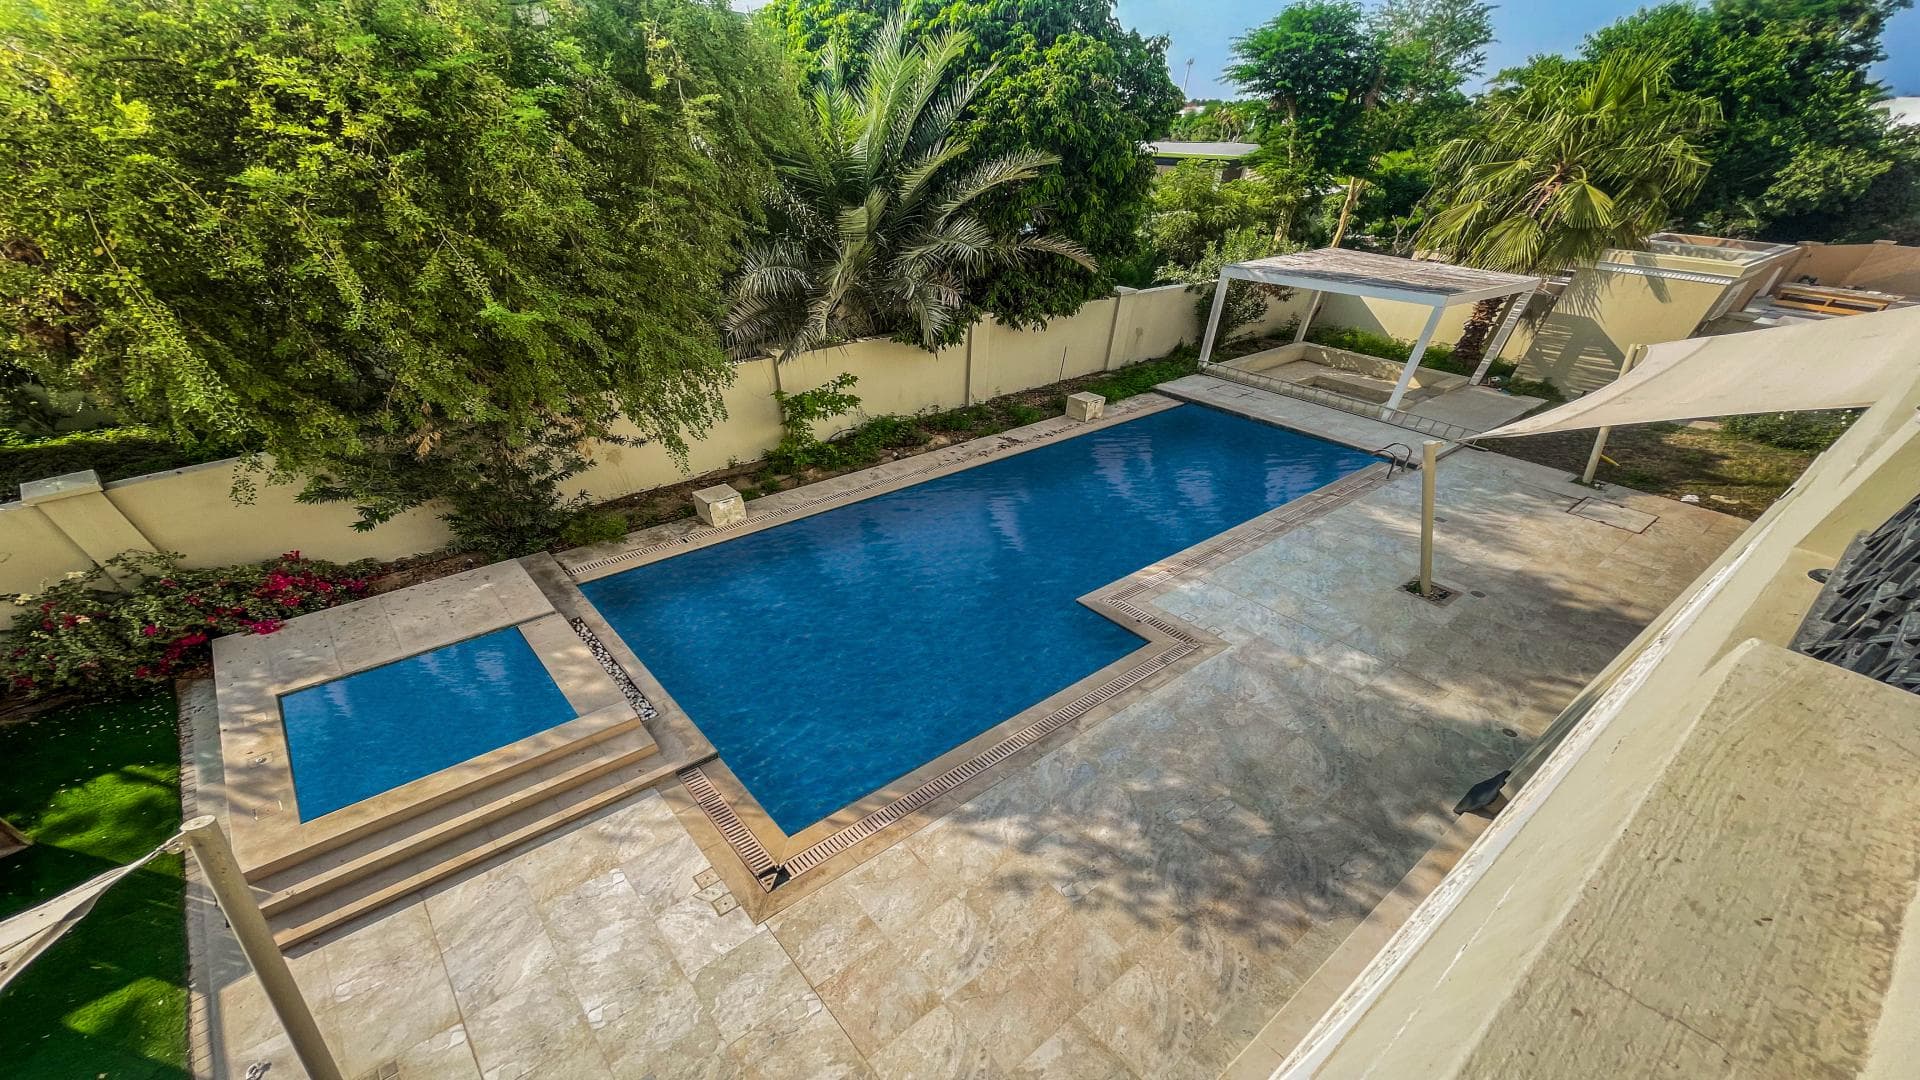 7 Bedroom Villa For Sale Al Thamam 05 Lp38555 9a30939b6962500.jpg